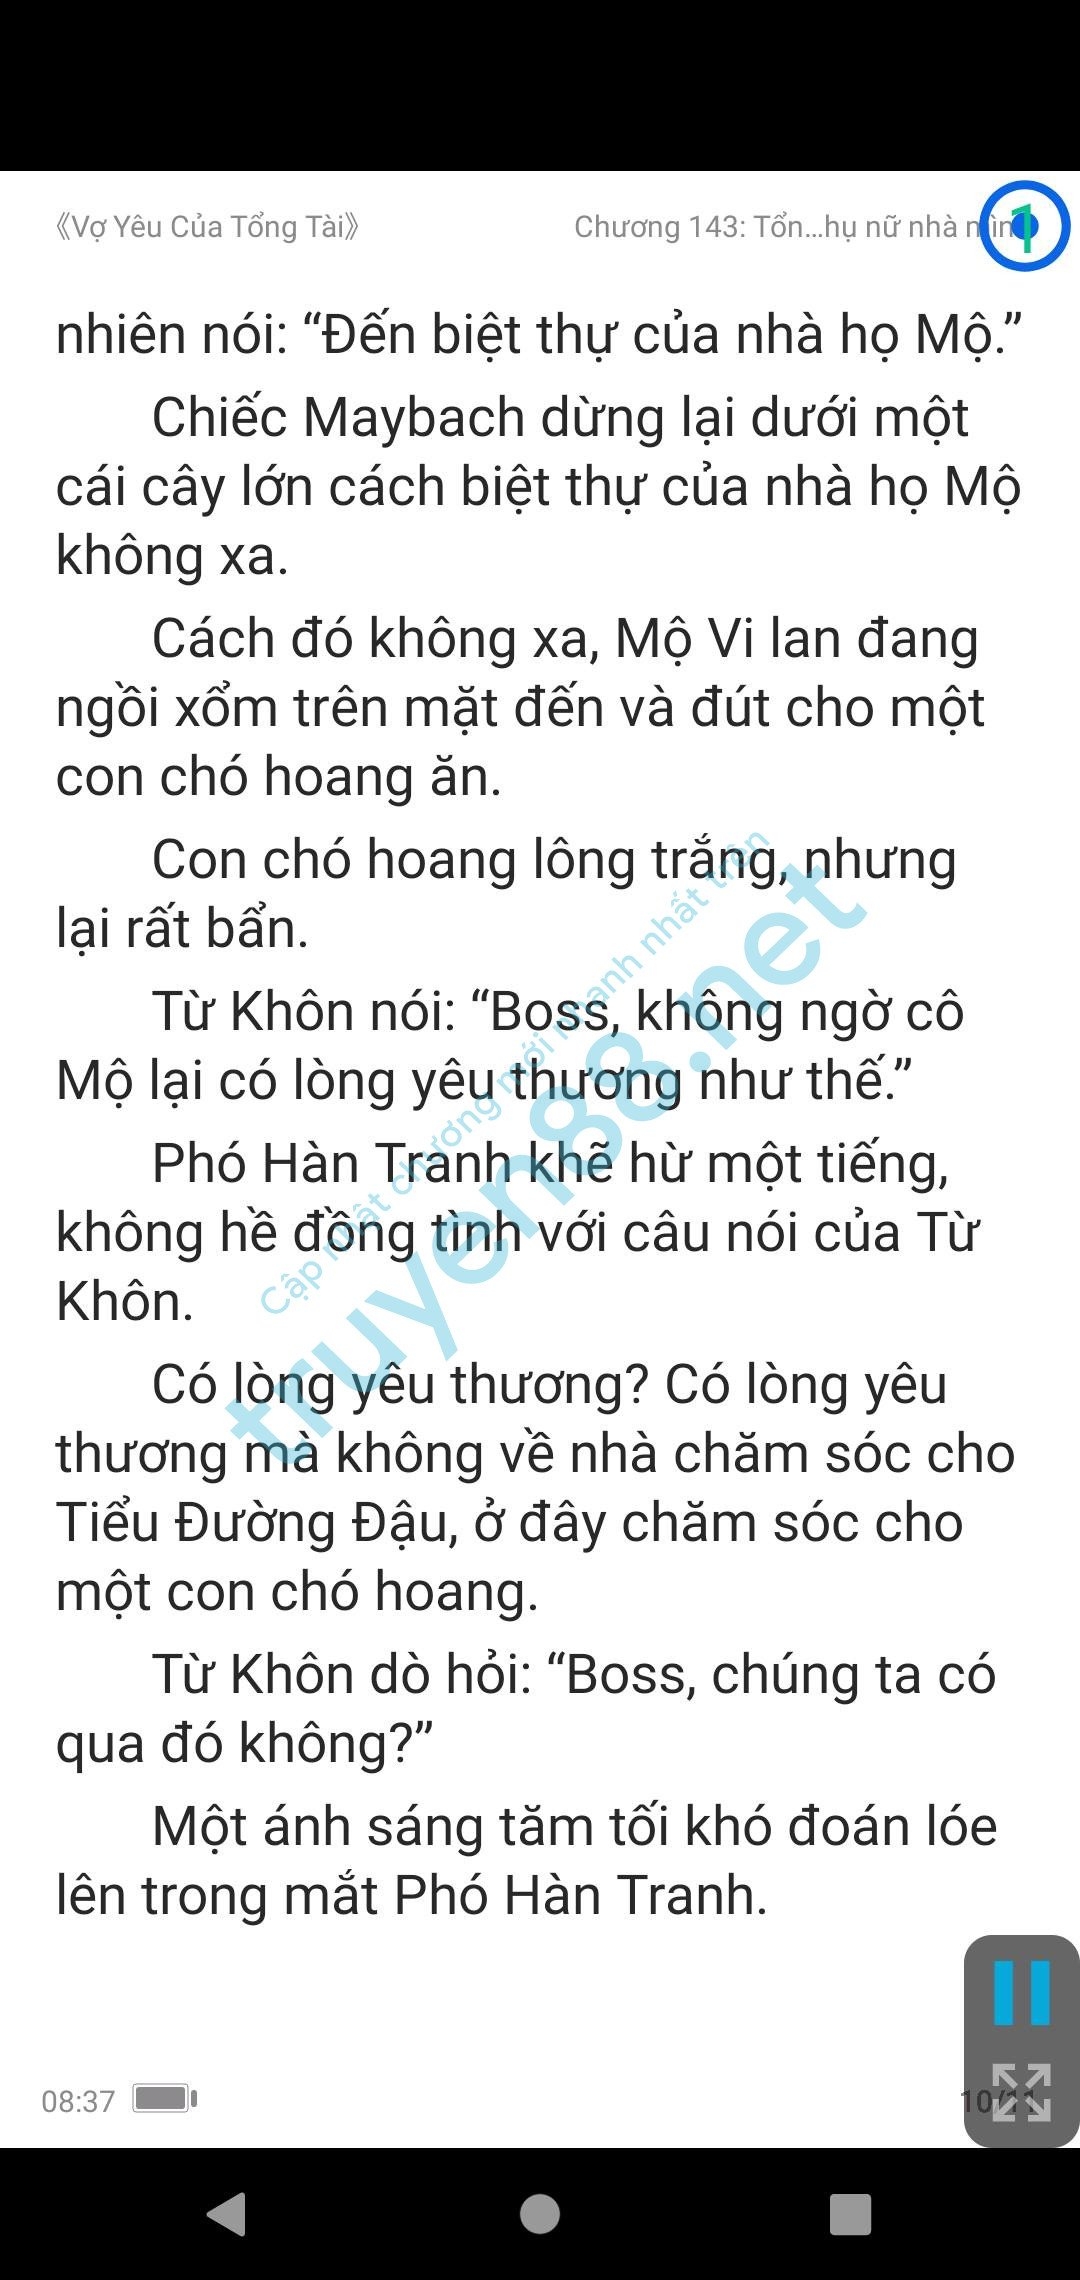 vo-yeu-cua-tong-tai-mo-vi-lan--pho-han-tranh-143-2